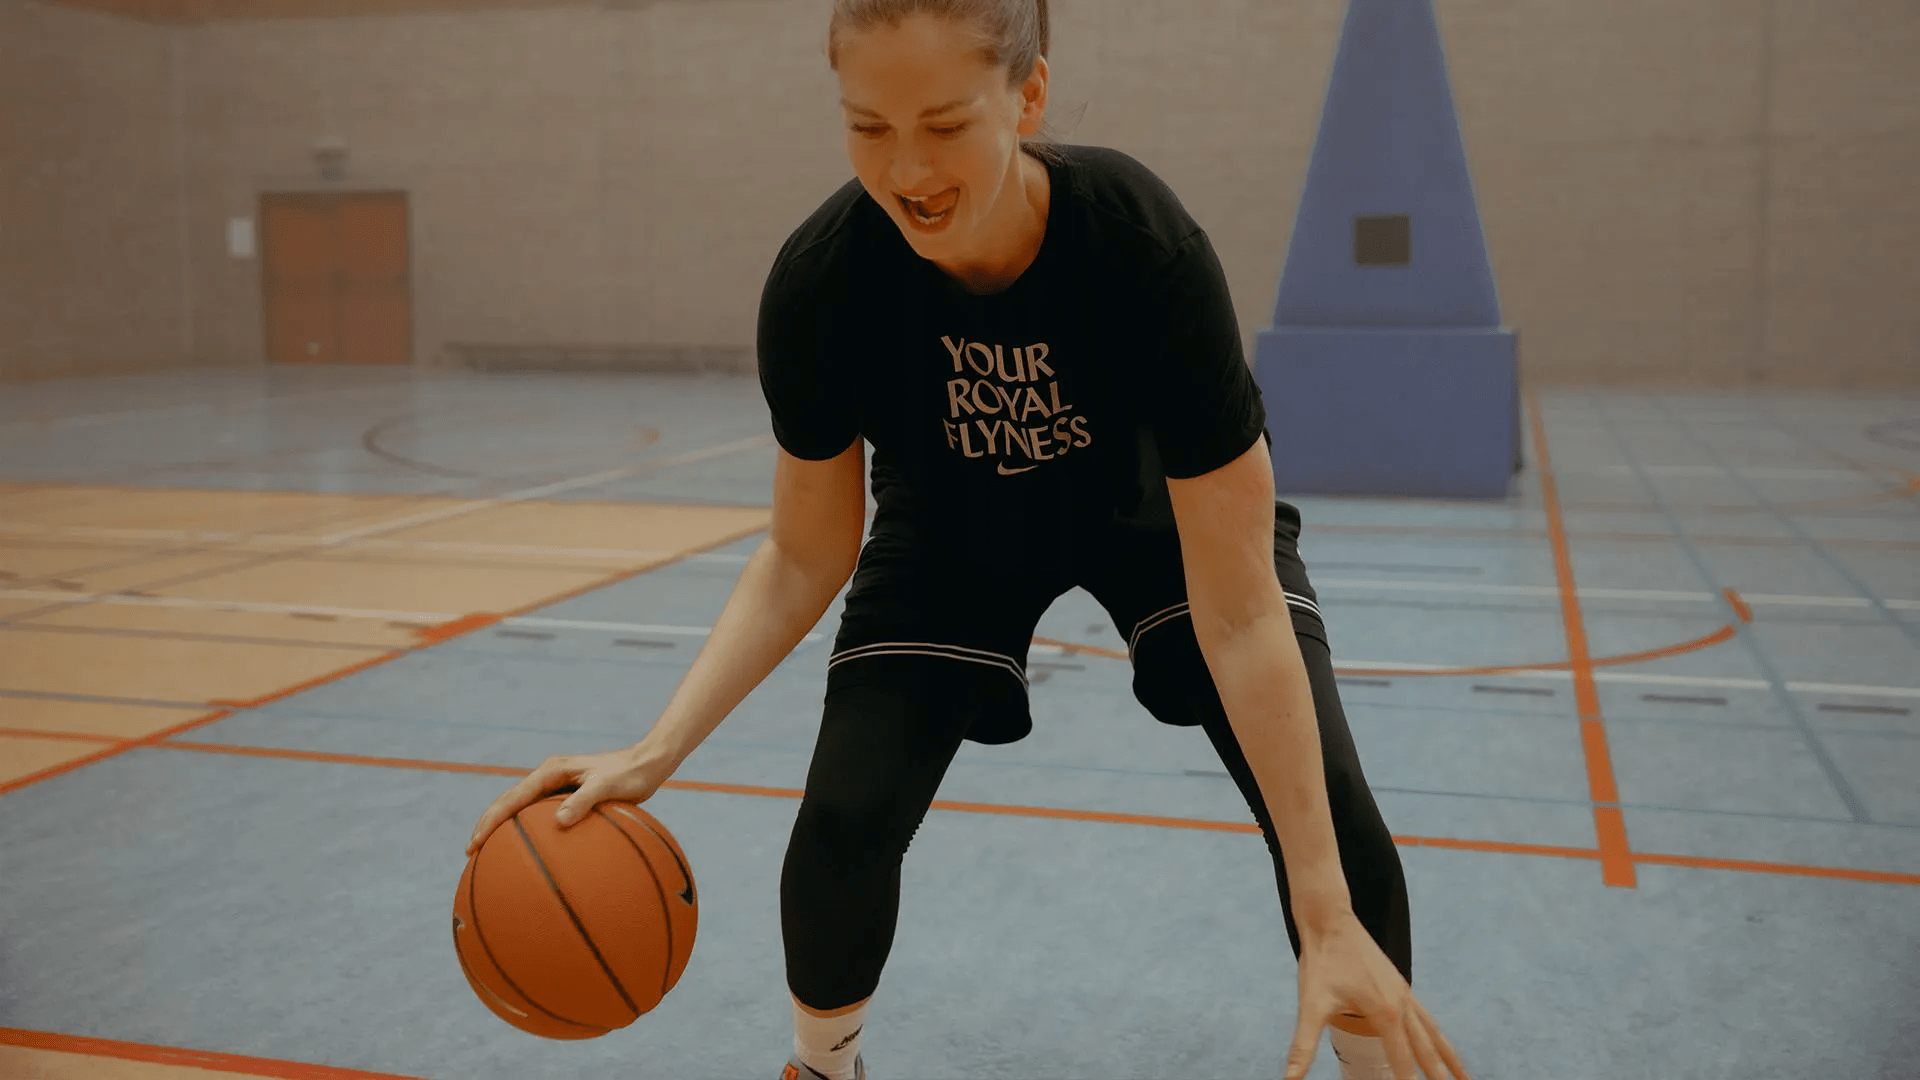 Emma Meesseman playing basketball